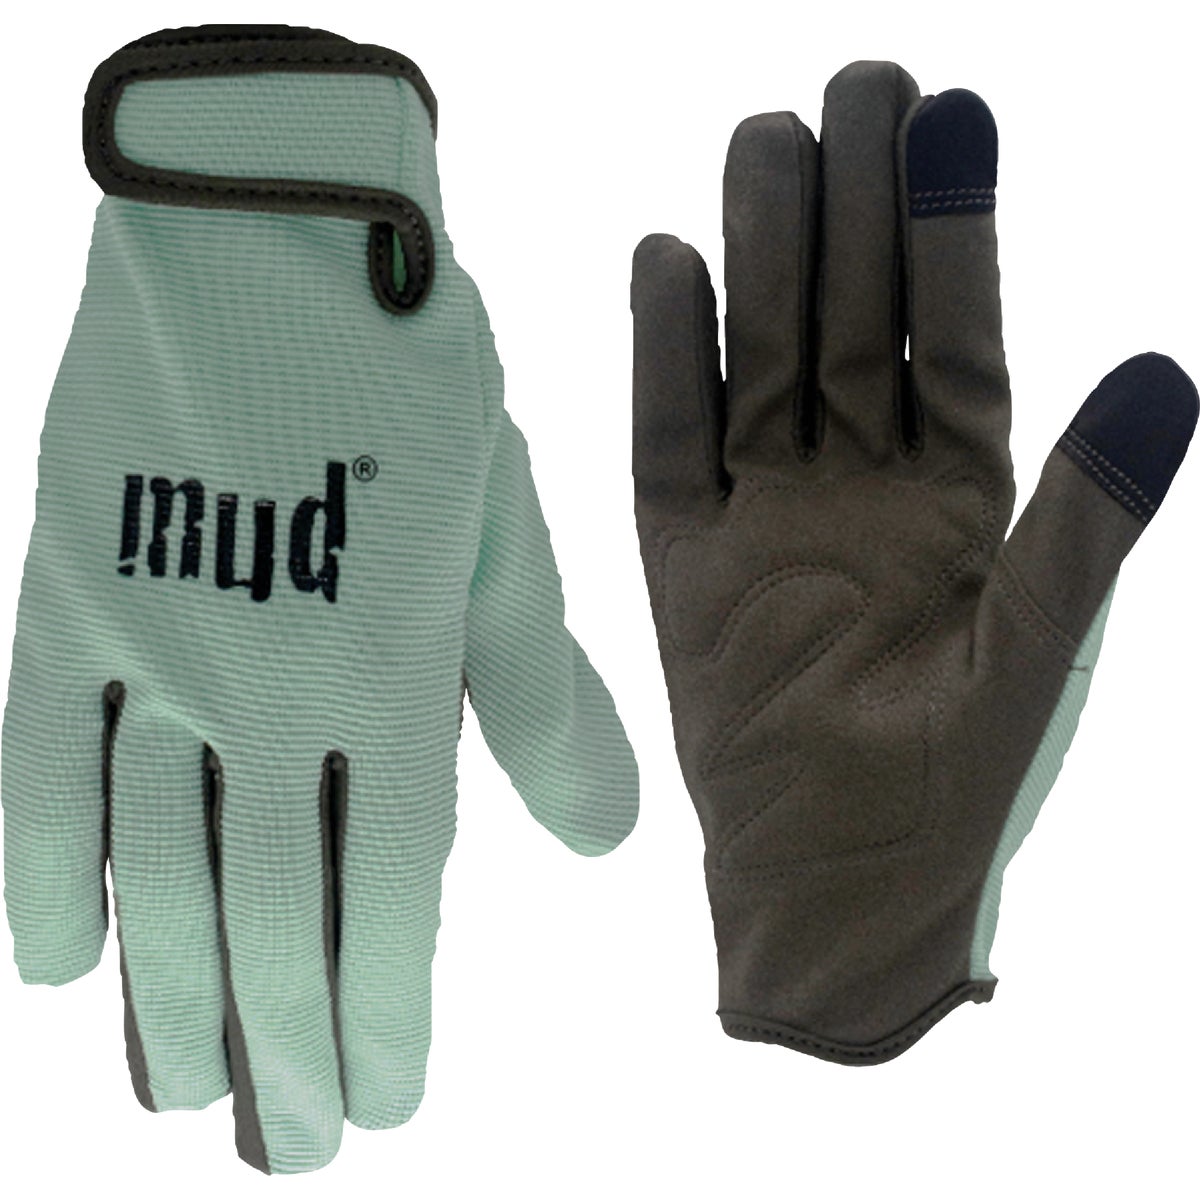 Mud Women's Small/Medium Synthetic Leather Mint Garden Glove